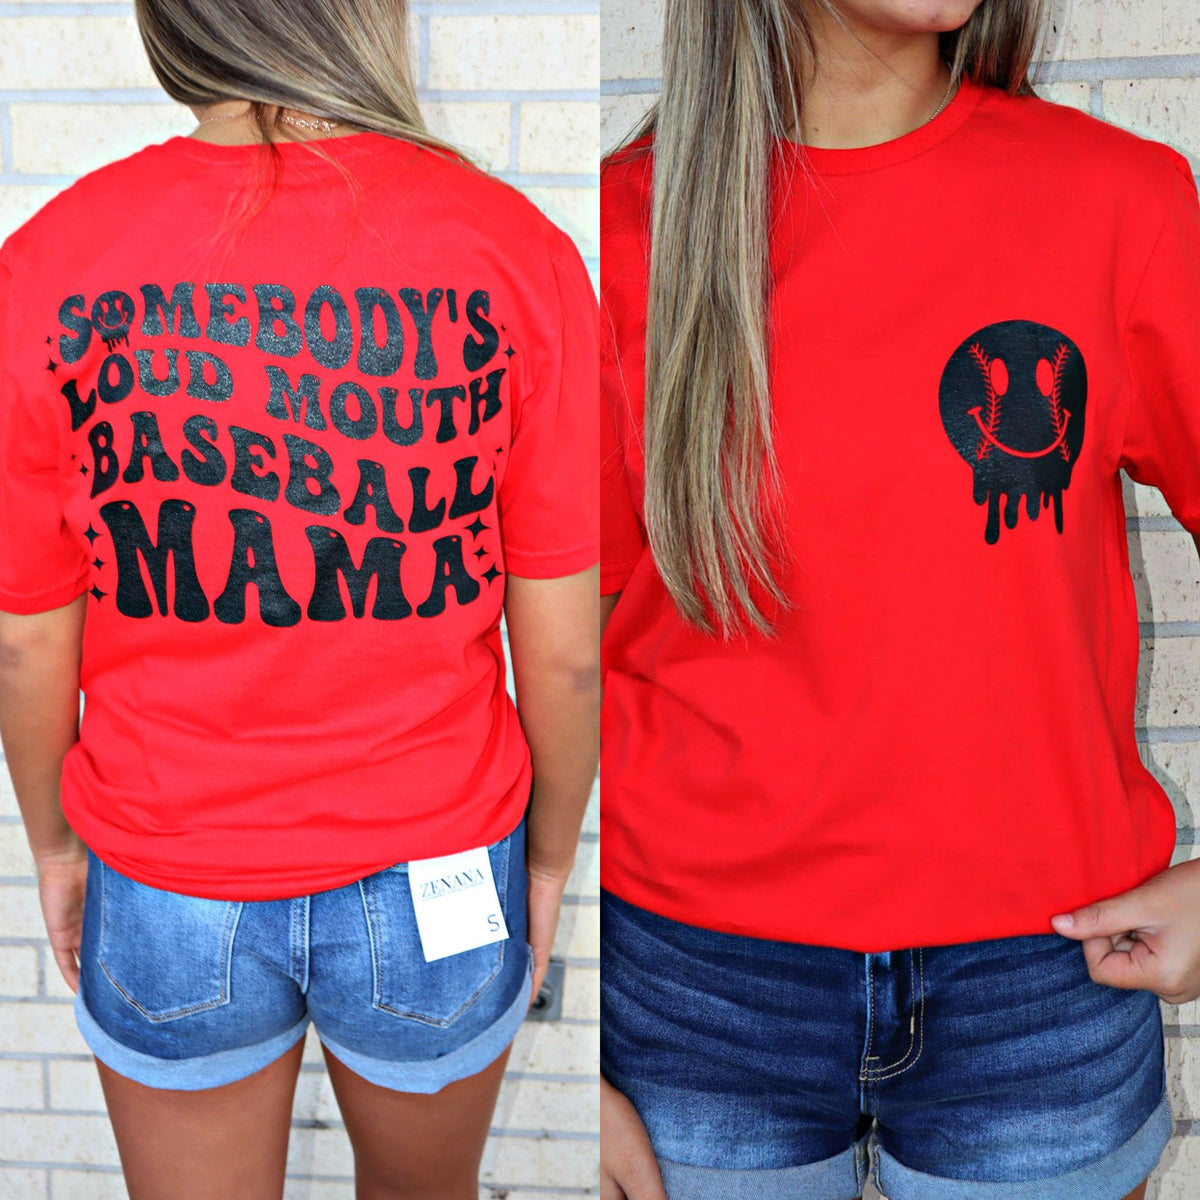 Somebody&#39;s Loud Mouth Baseball Mama Tee or Sweatshirt